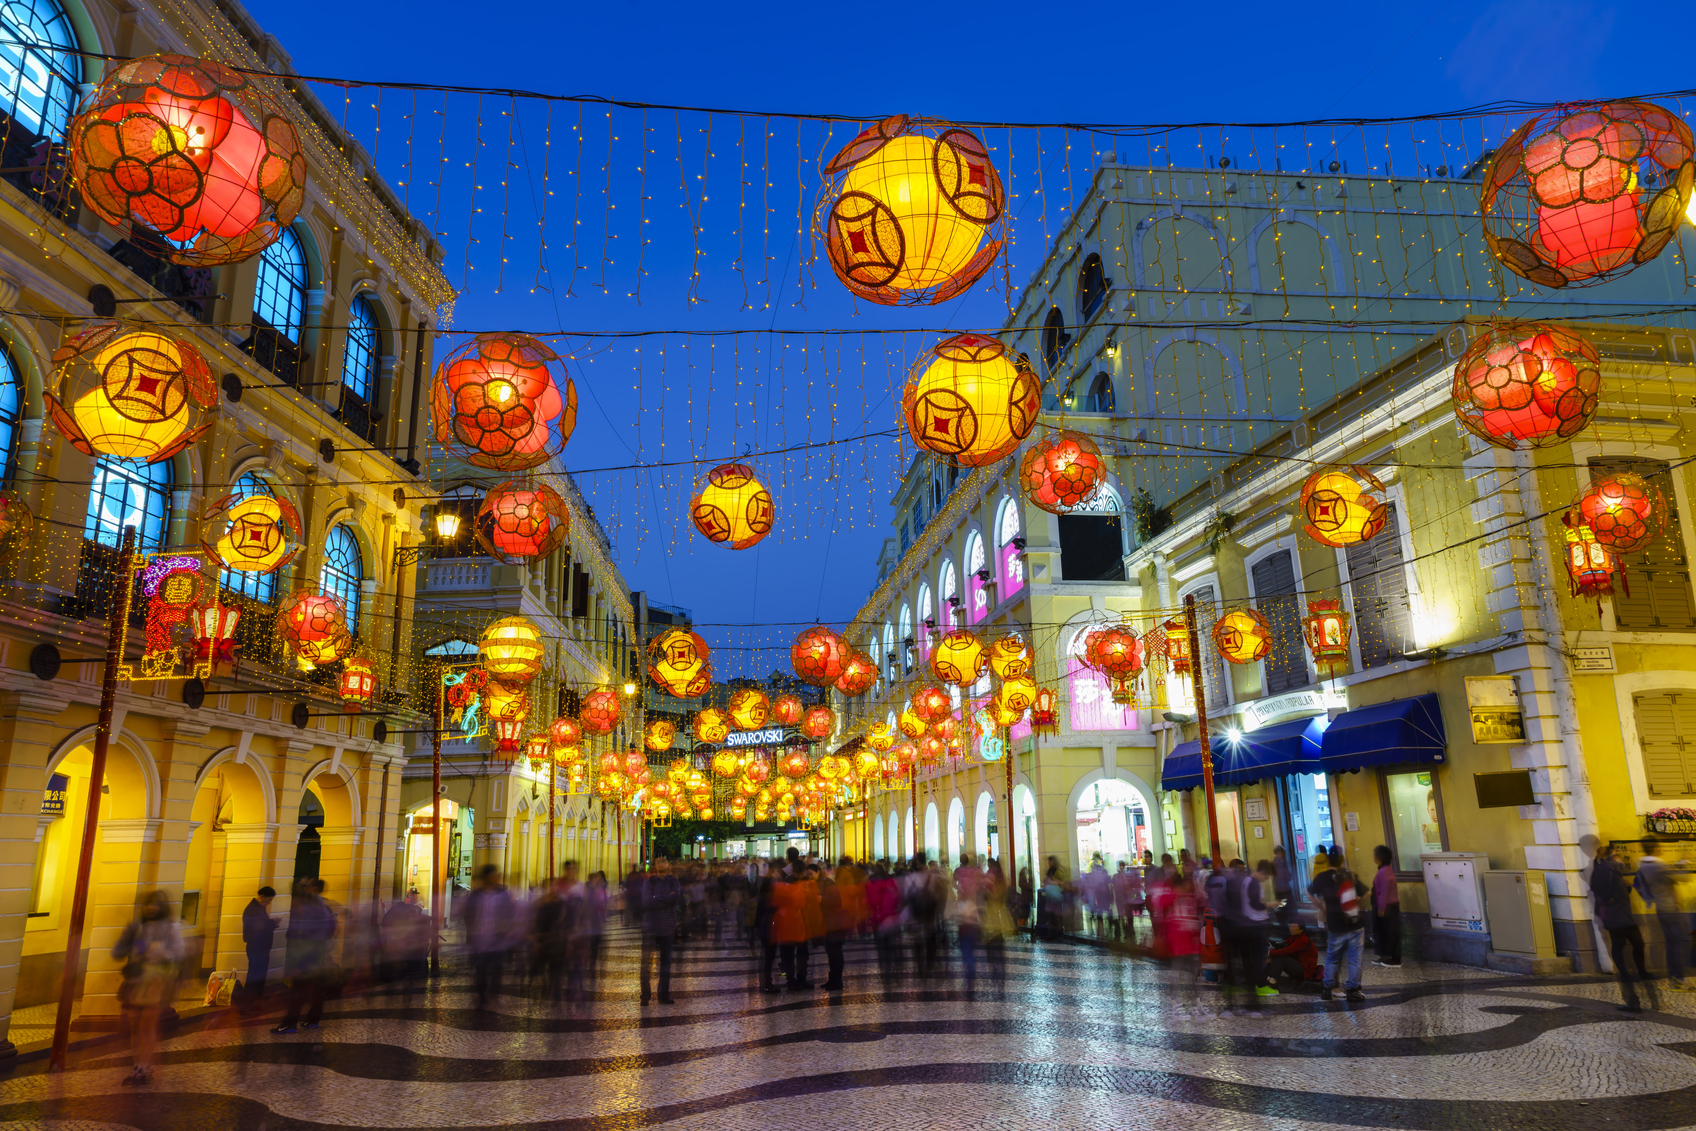 Macau: More than just casinos